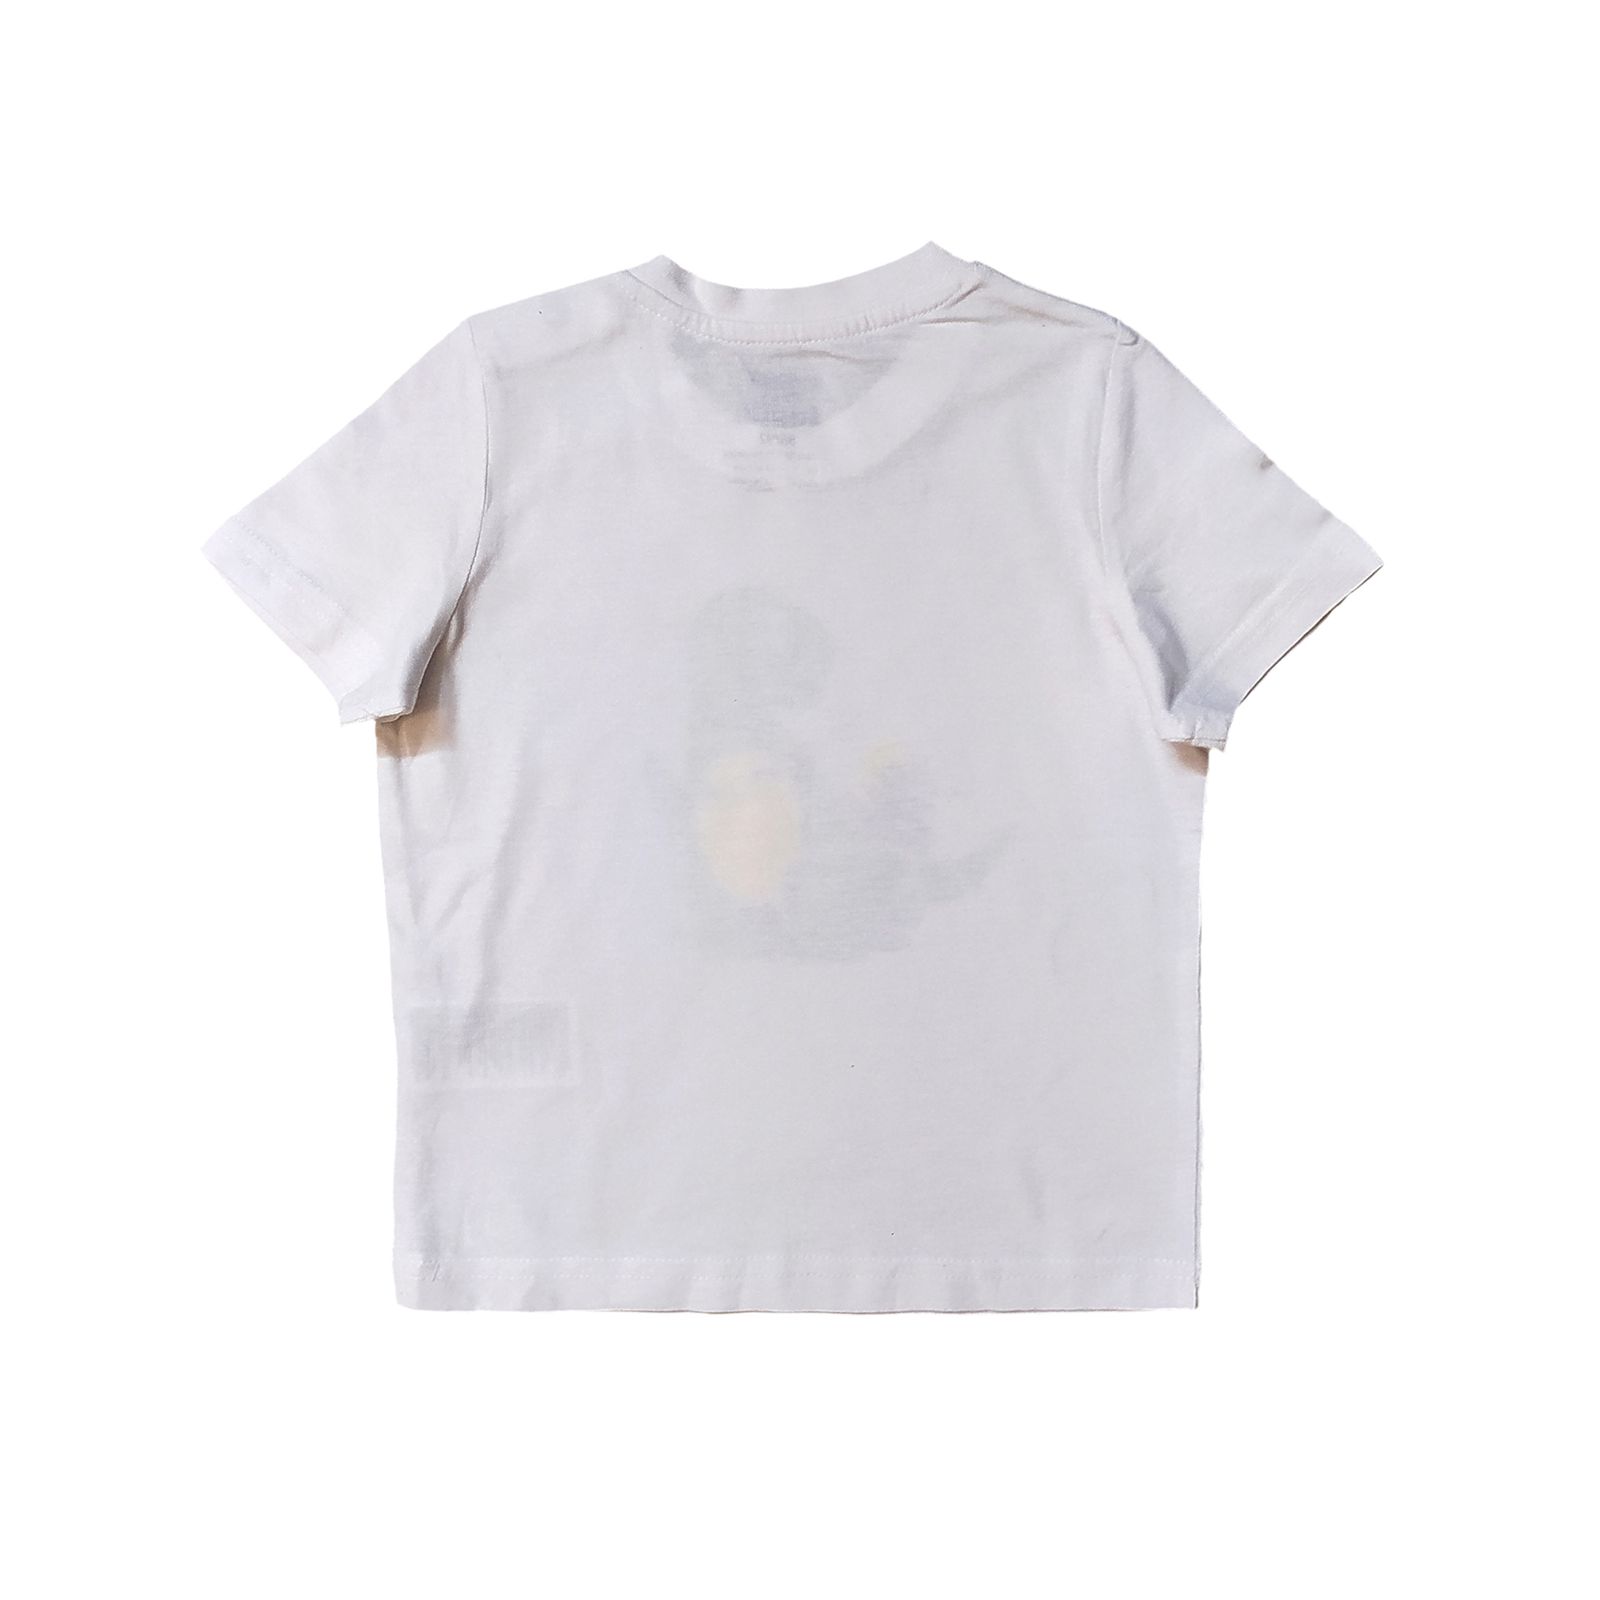 تی شرت بچگانه لوپیلو طرح دایناسور کد B12 -  - 2